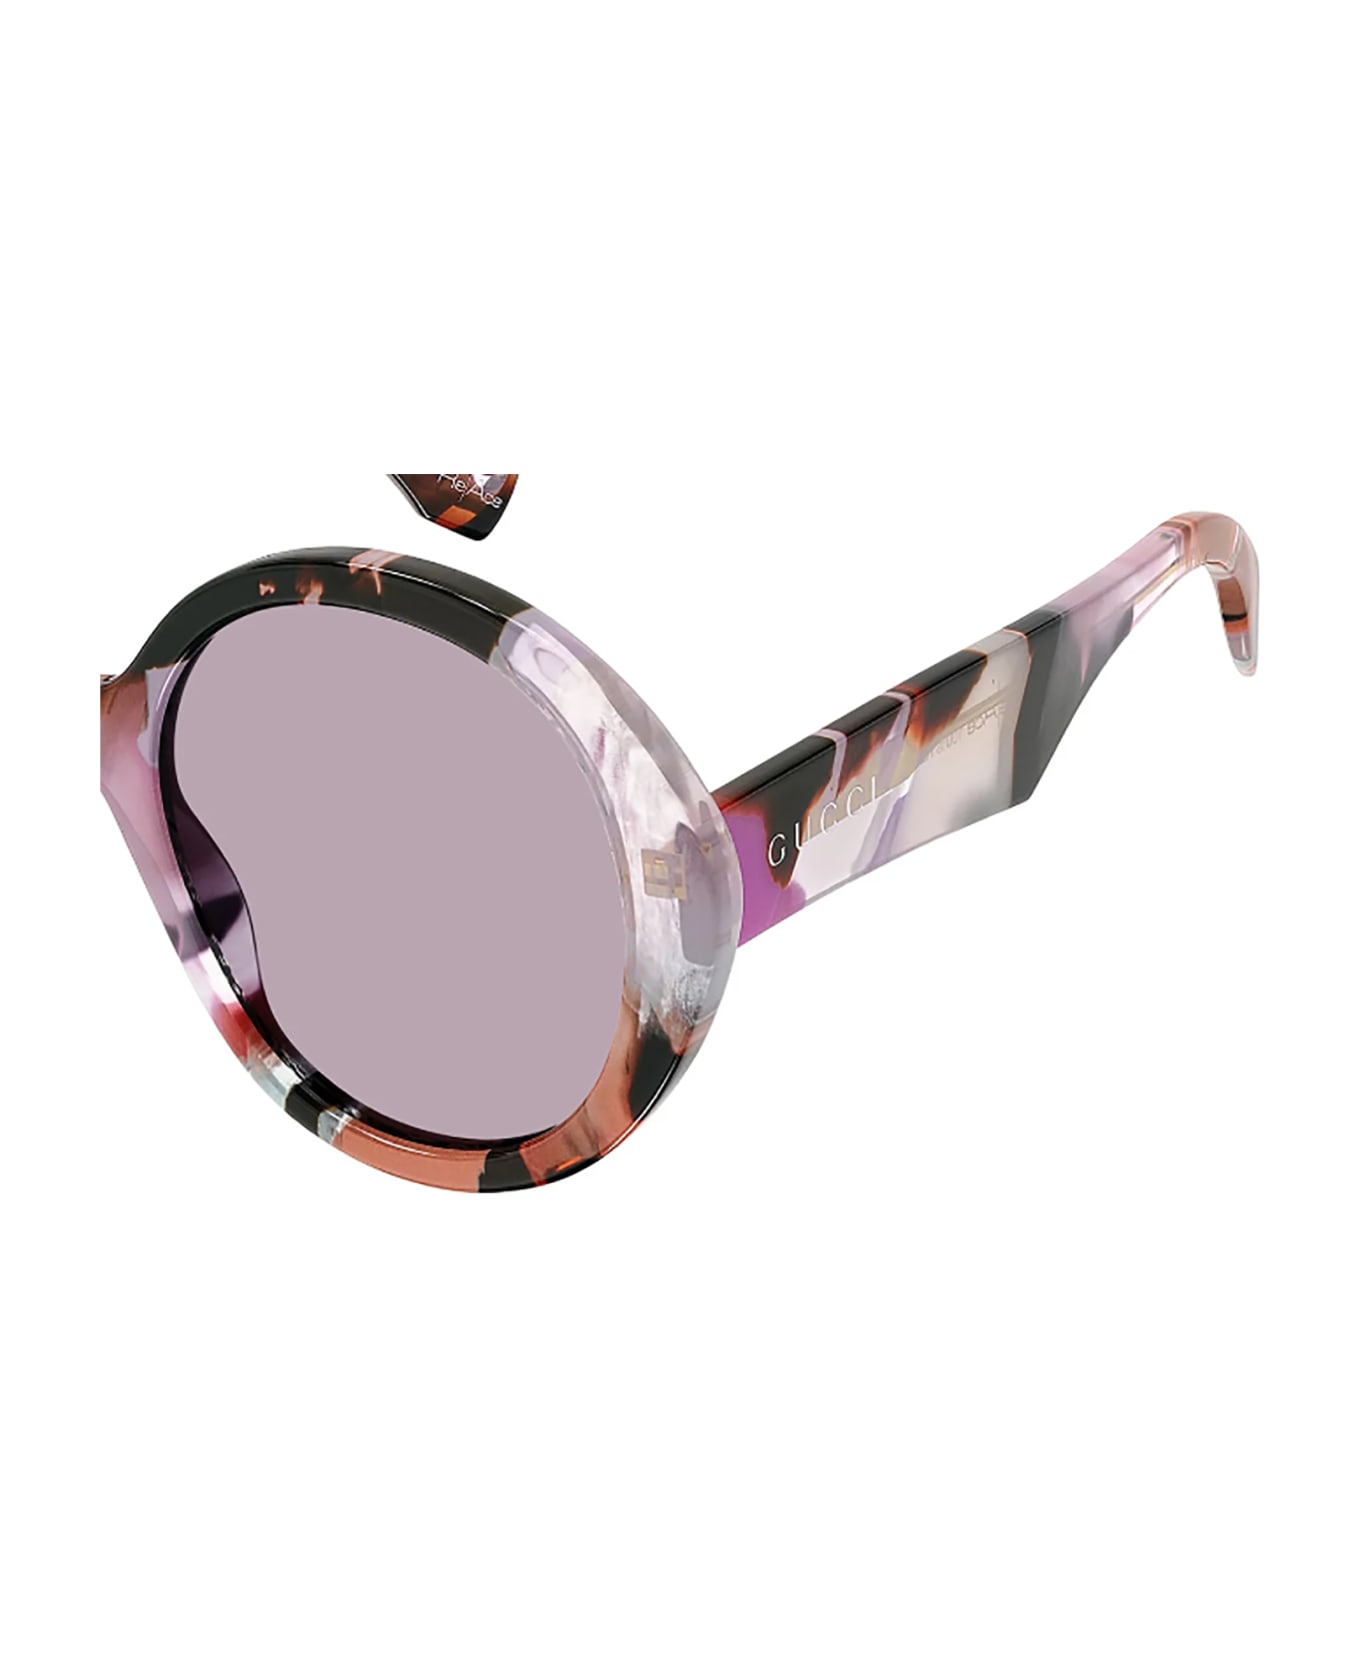 Gucci Eyewear GG1628S Sunglasses - Pink Pink Violet